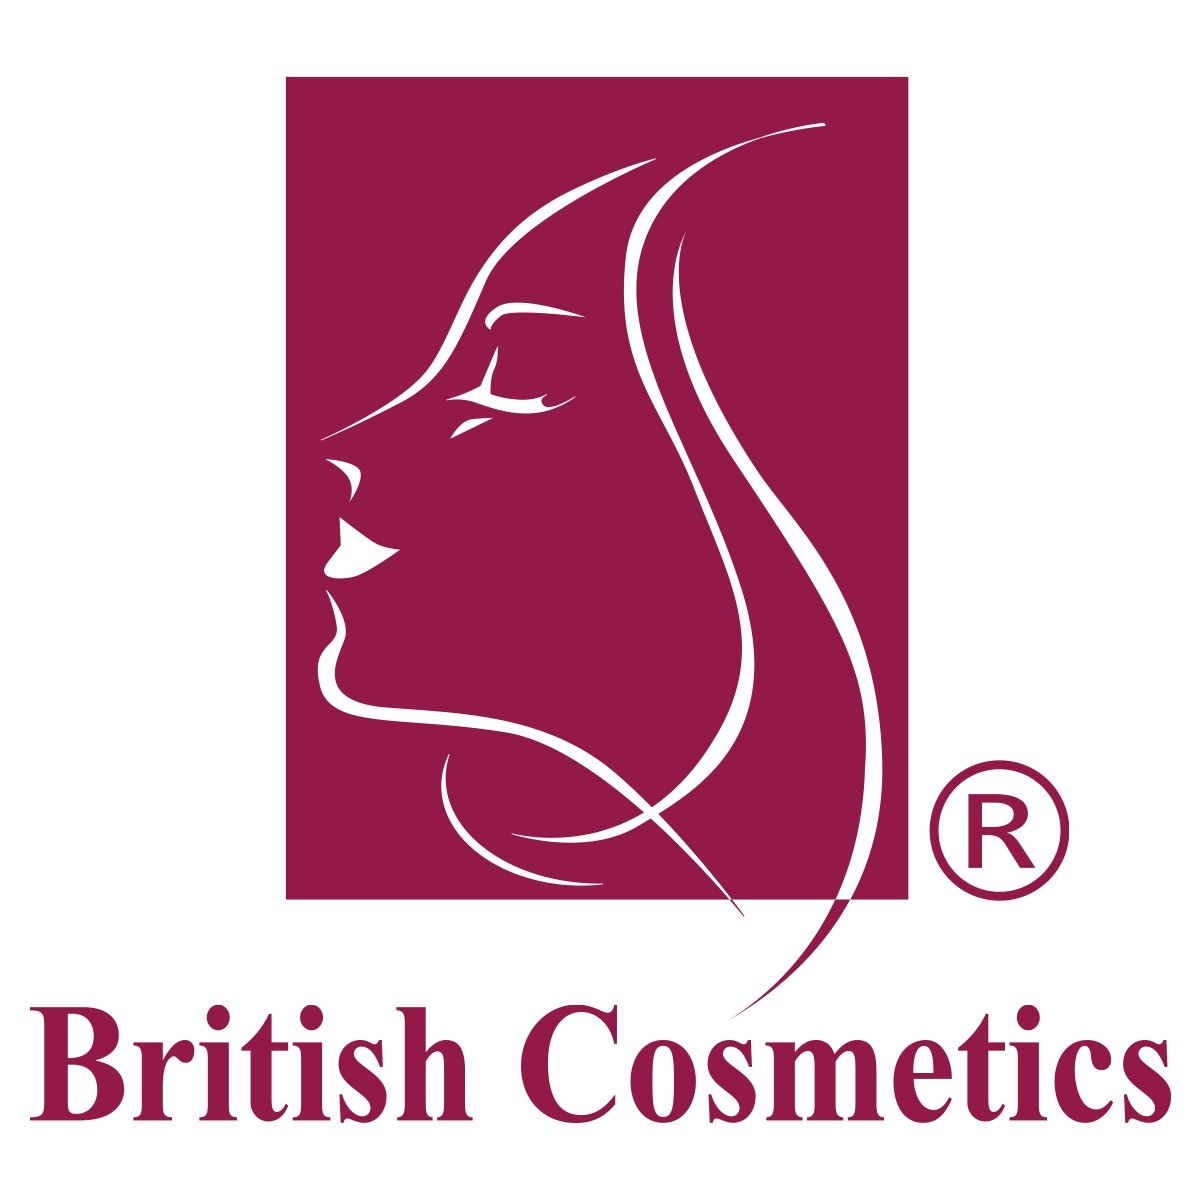 British Cosmetics